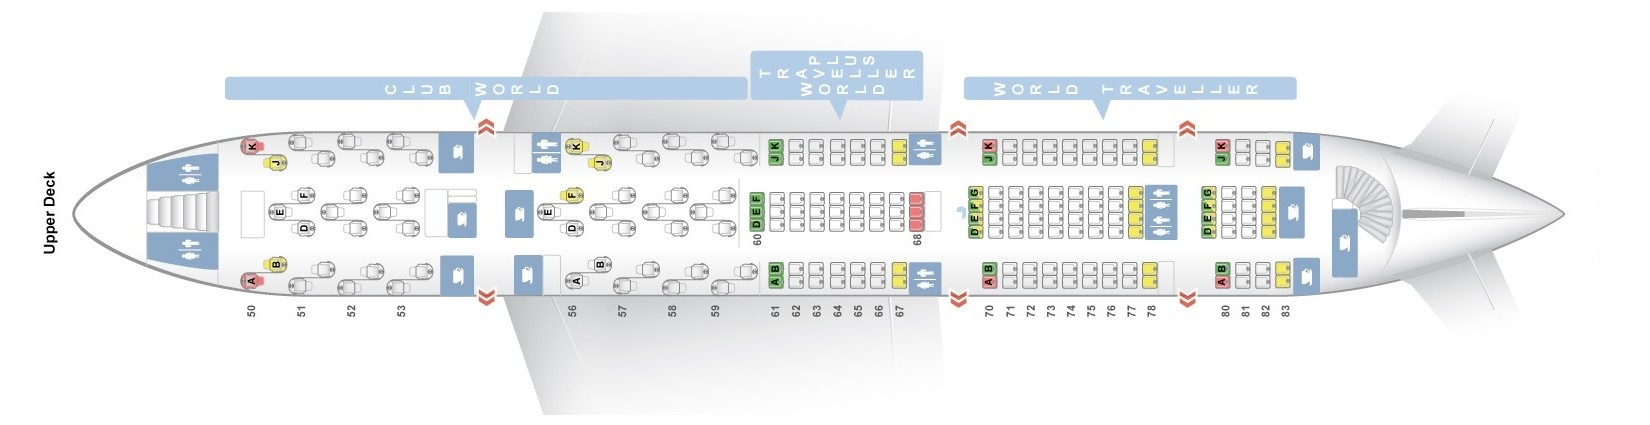 Seating plan: british airways a380 seat map   airreview